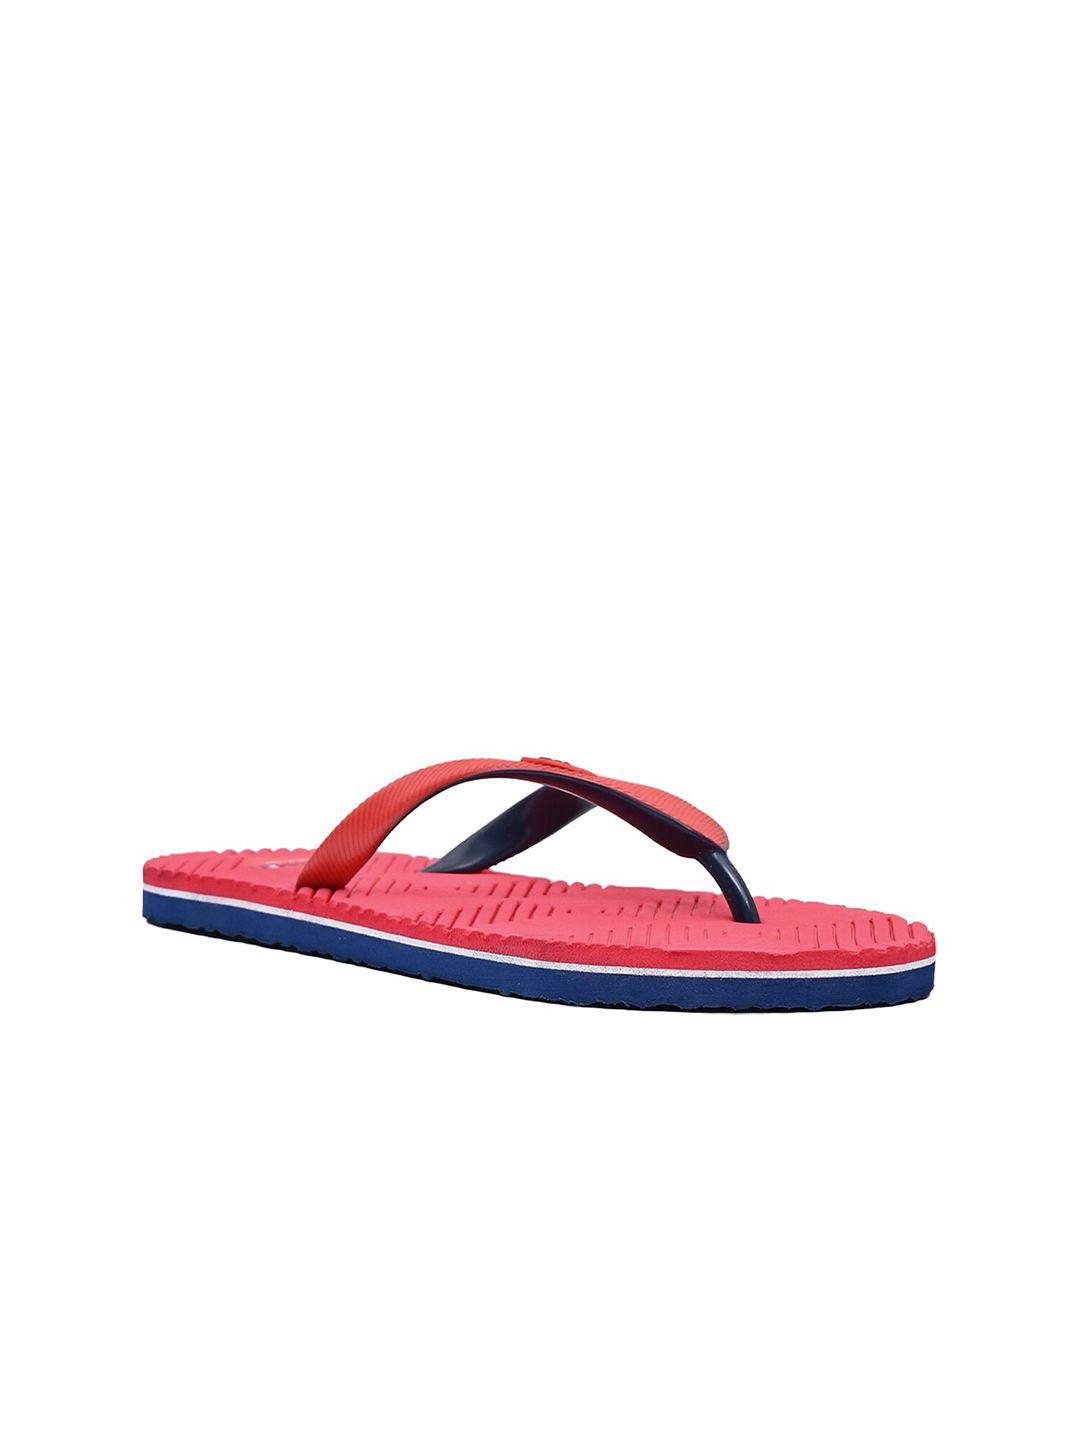 tucson women red & navy blue rubber thong flip-flops